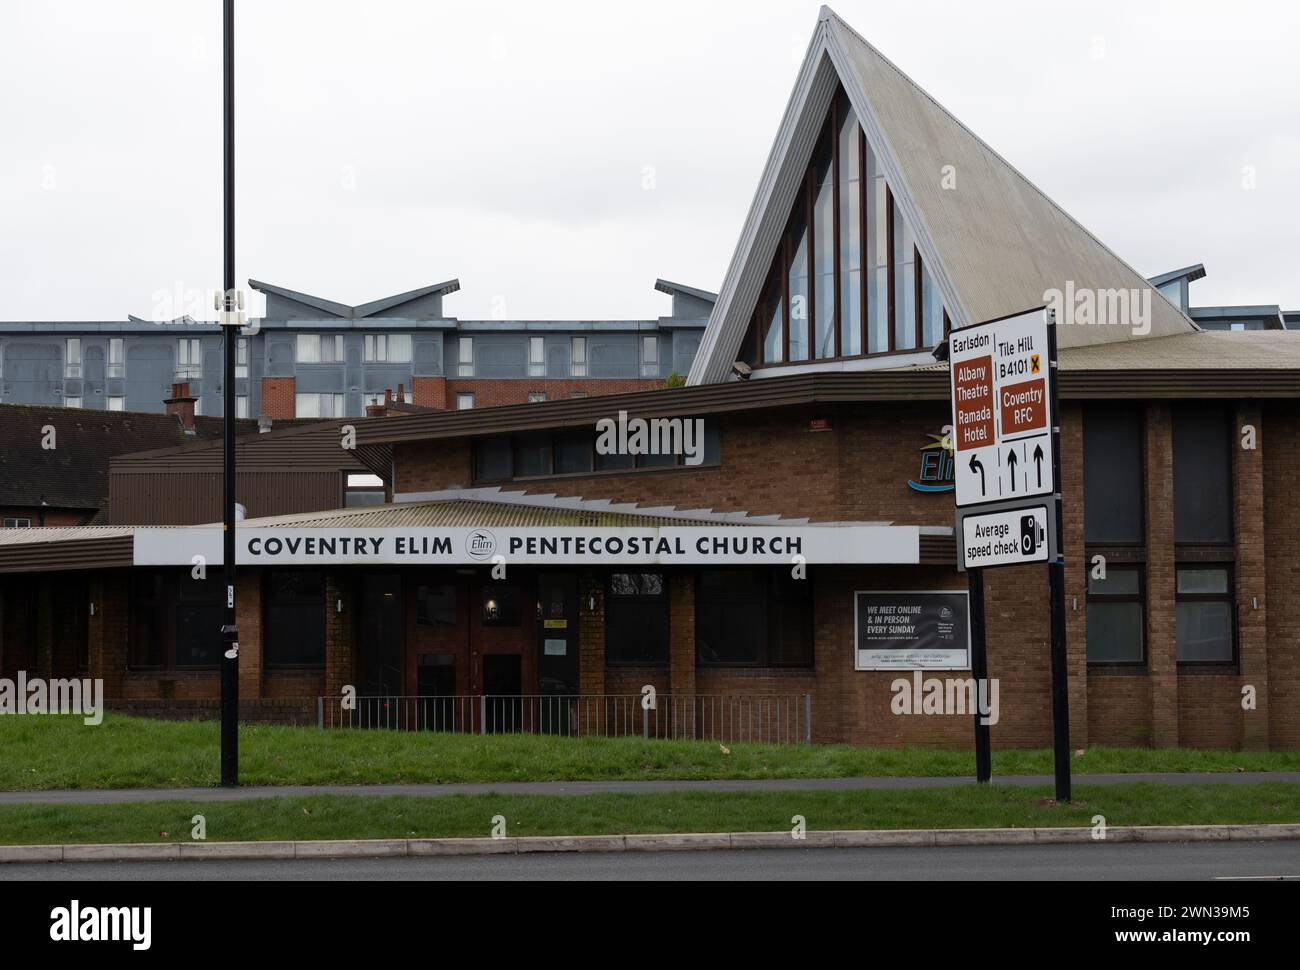 Coventry Elim Pentecostal Church, Coventry, West Midlands, England, UK Stock Photo